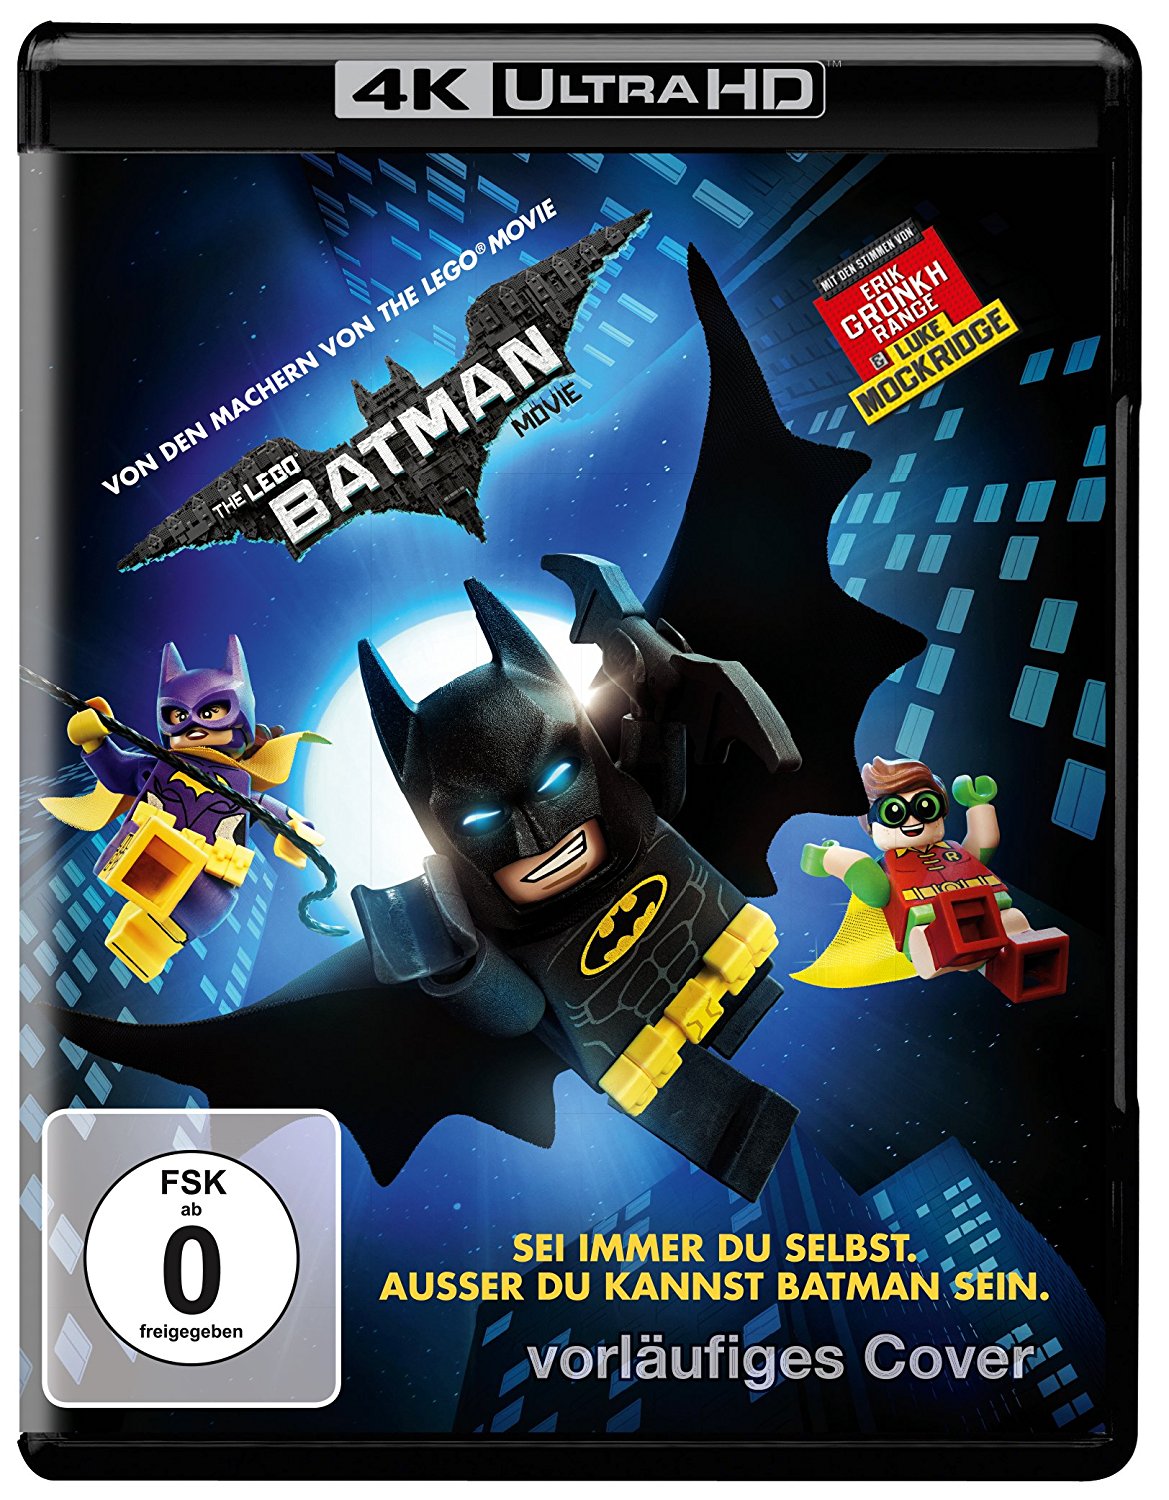 The LEGO Batman Movie 4k UltraHD PreCover